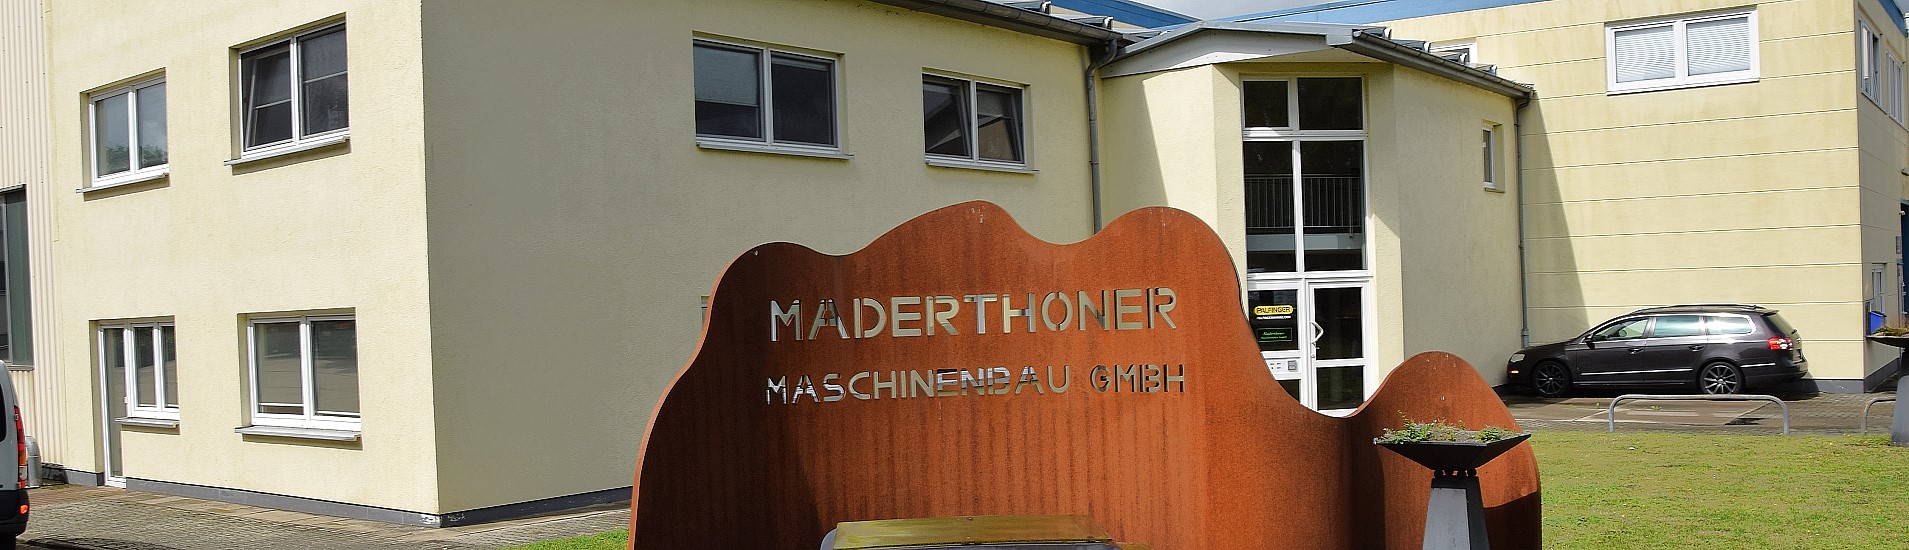 Maderthoner Maschinenbau - Kontakt